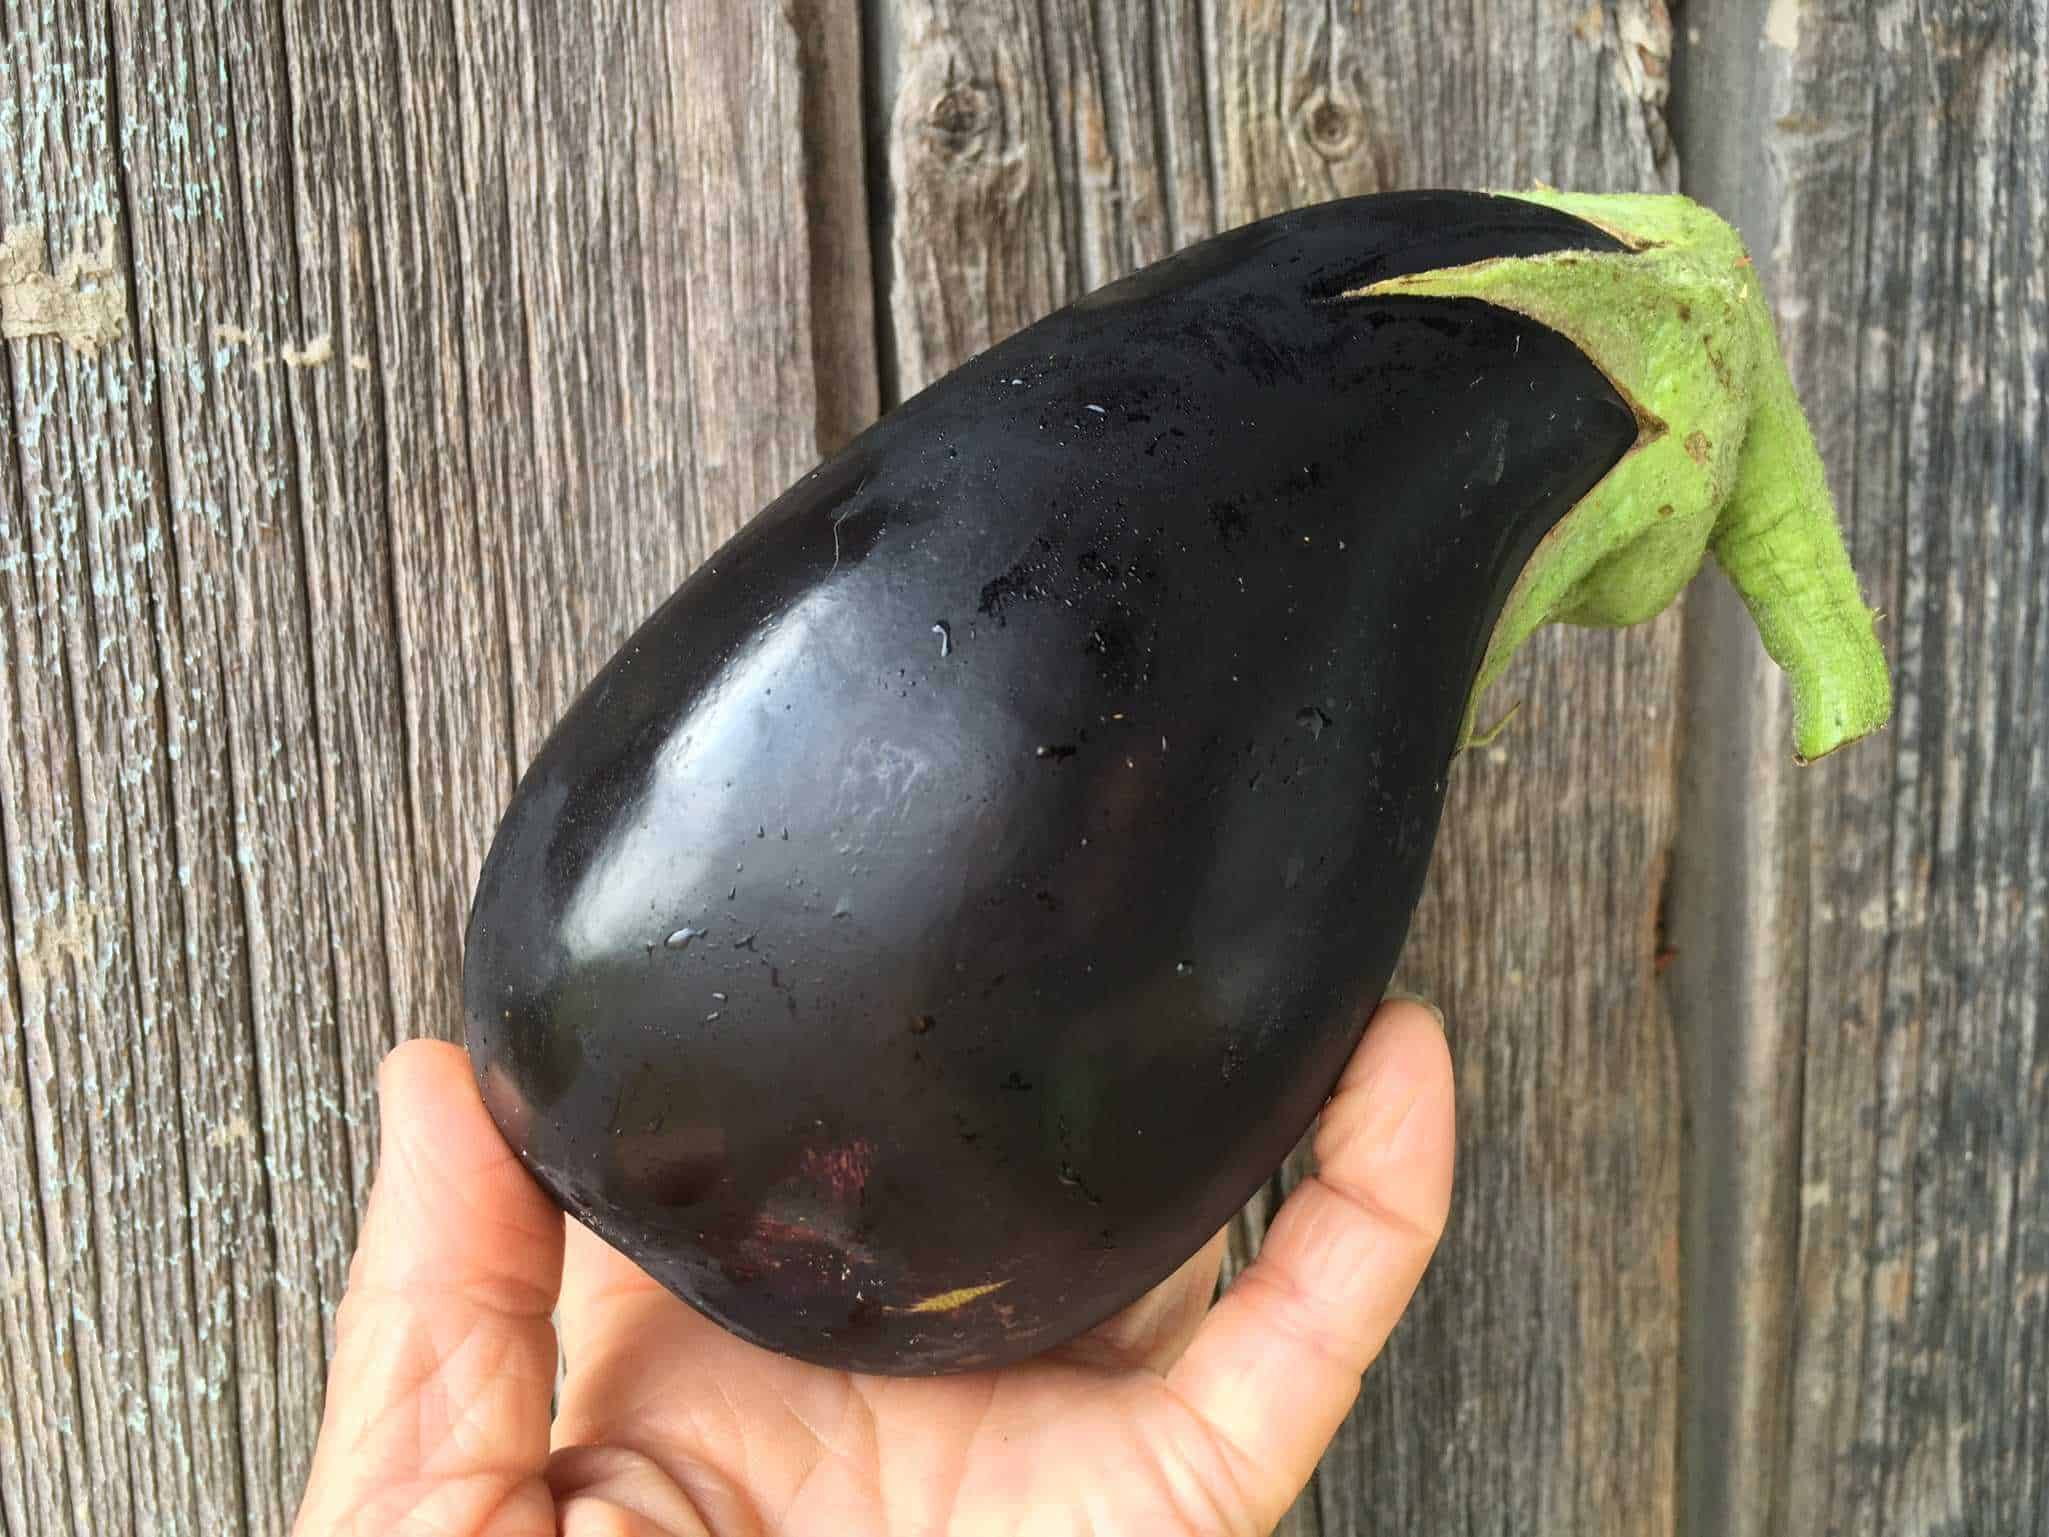 Italian eggplant